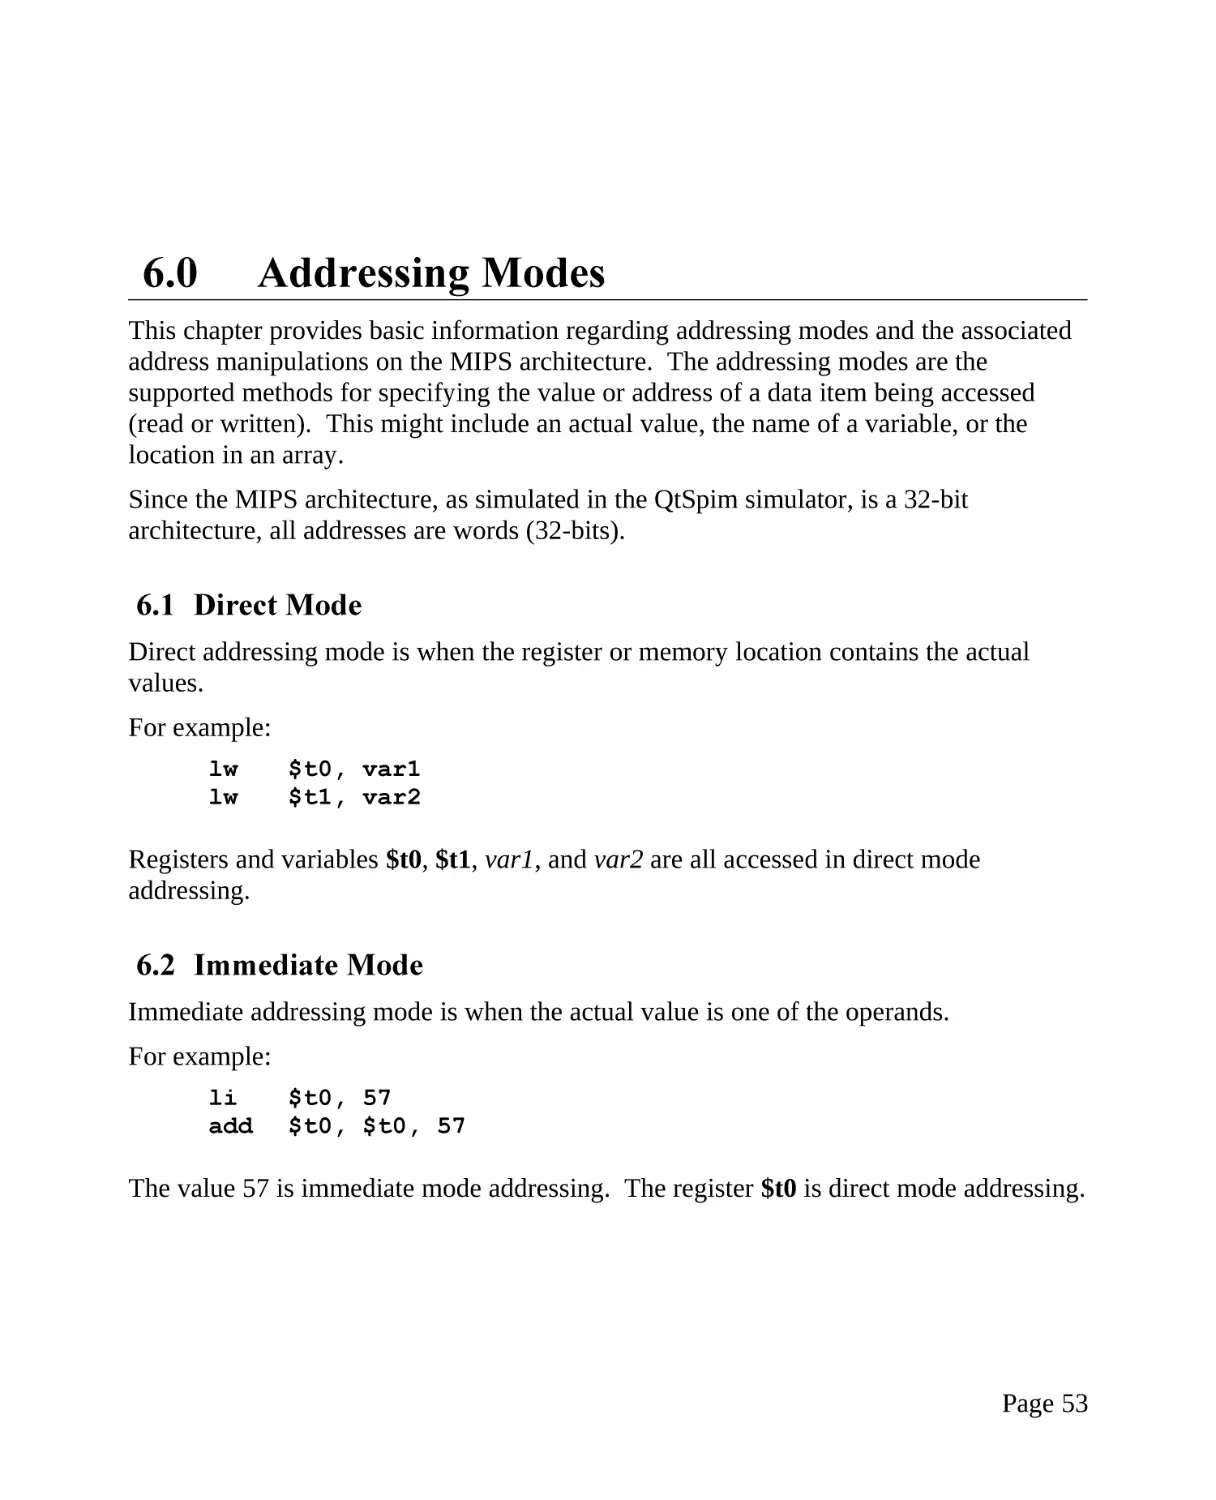 6.0 Addressing Modes
6.1 Direct Mode
6.2 Immediate Mode